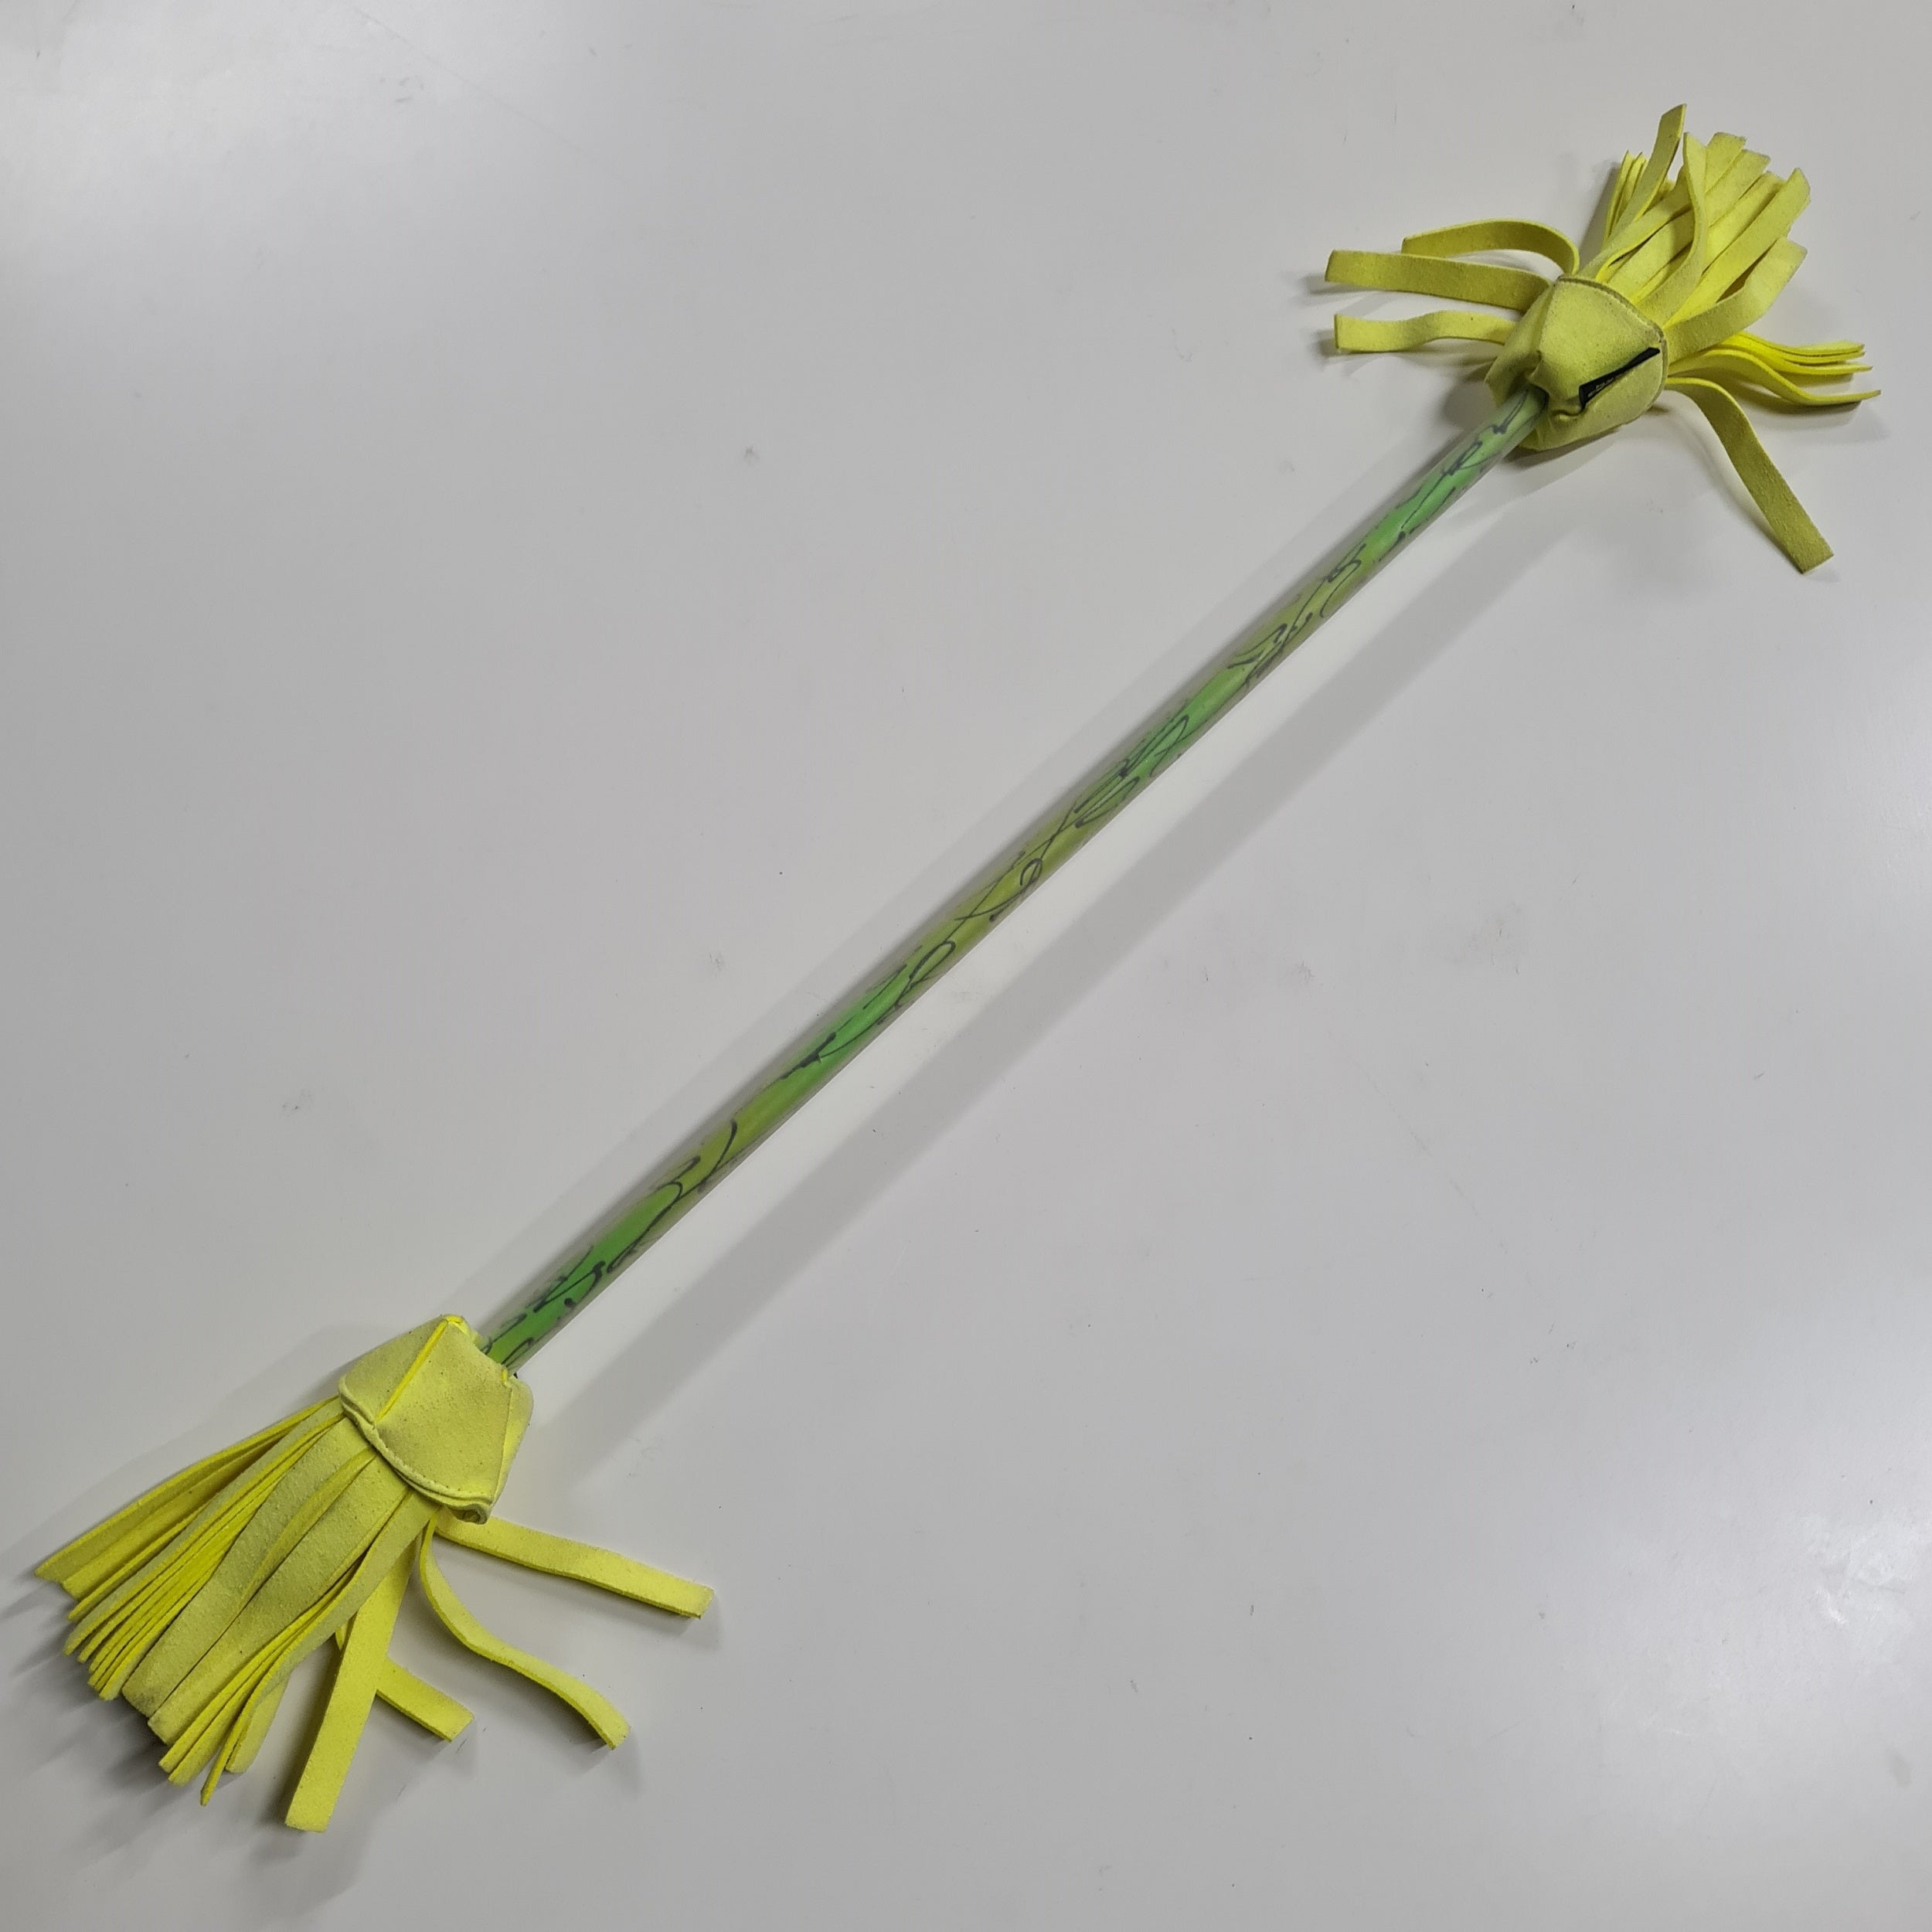 Juggle Dream Picasso Flower Stick & Handsticks - Bargain basement - RRP £21.98